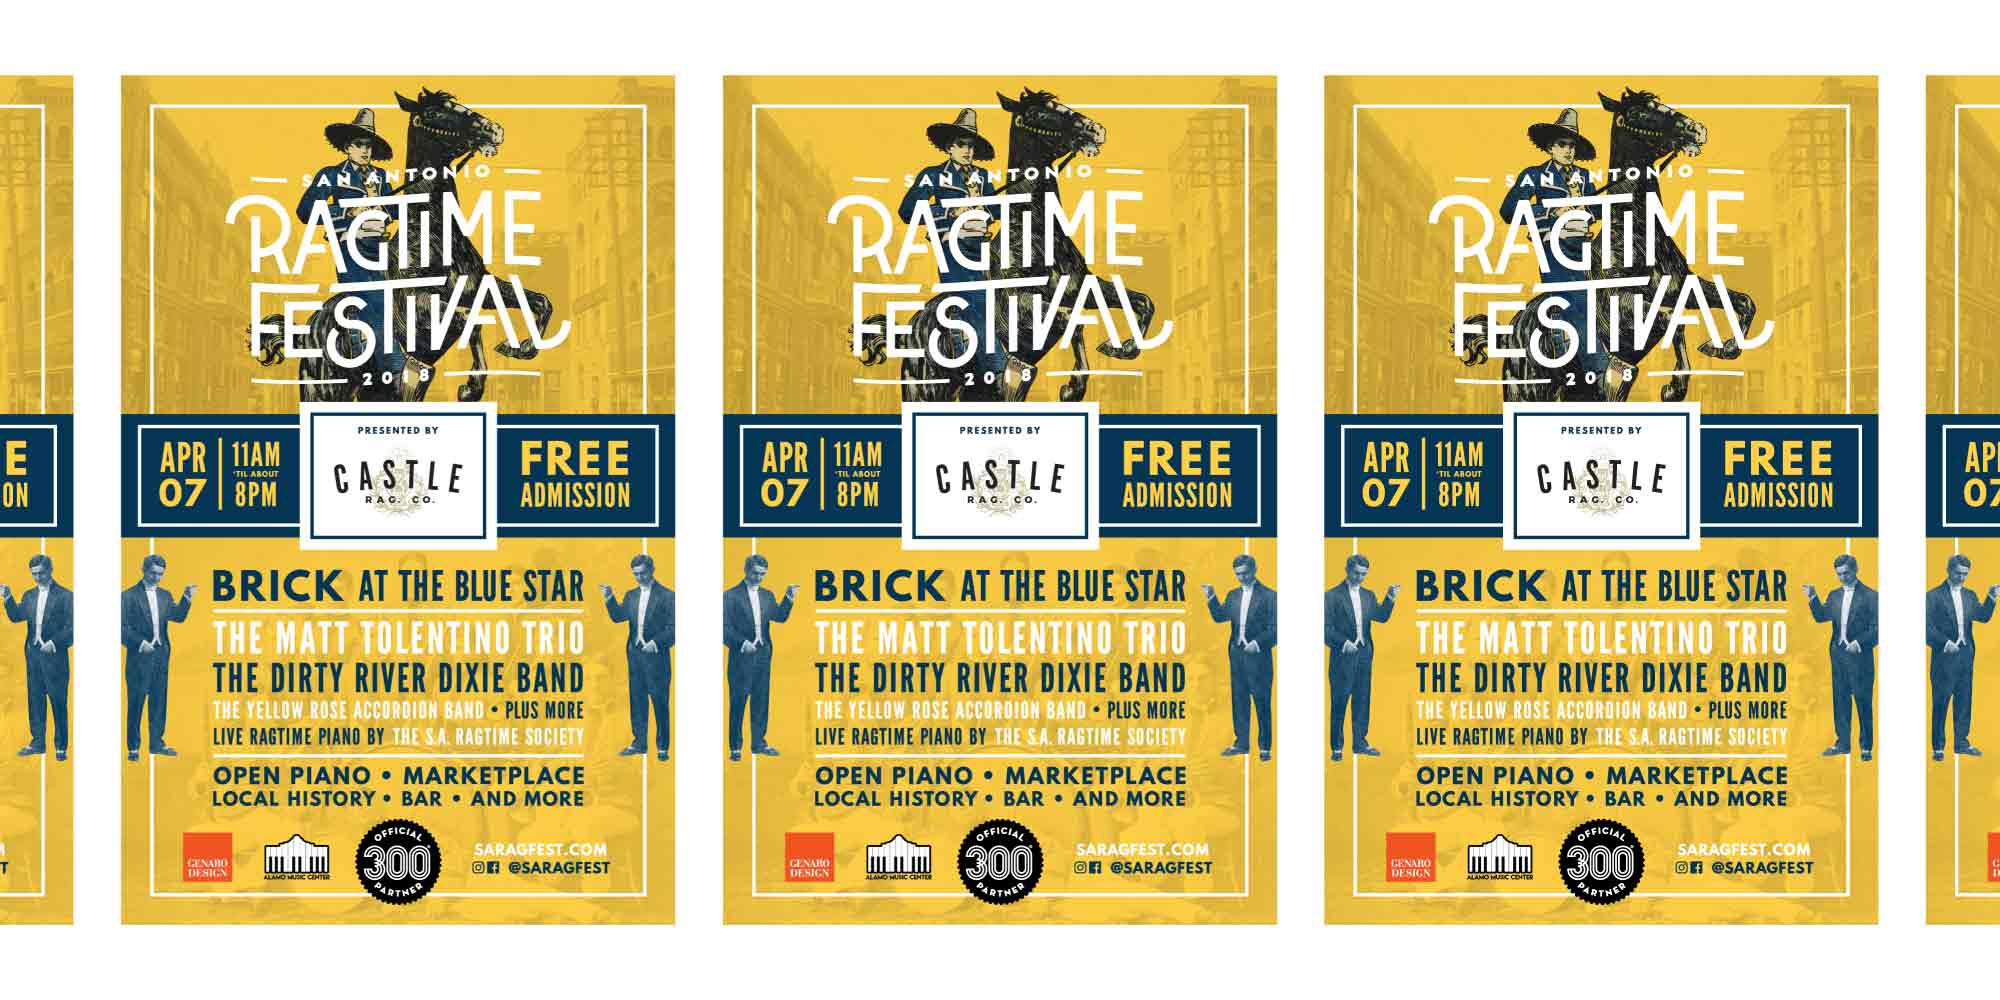 2018 San Antonio Ragtime Festival poster